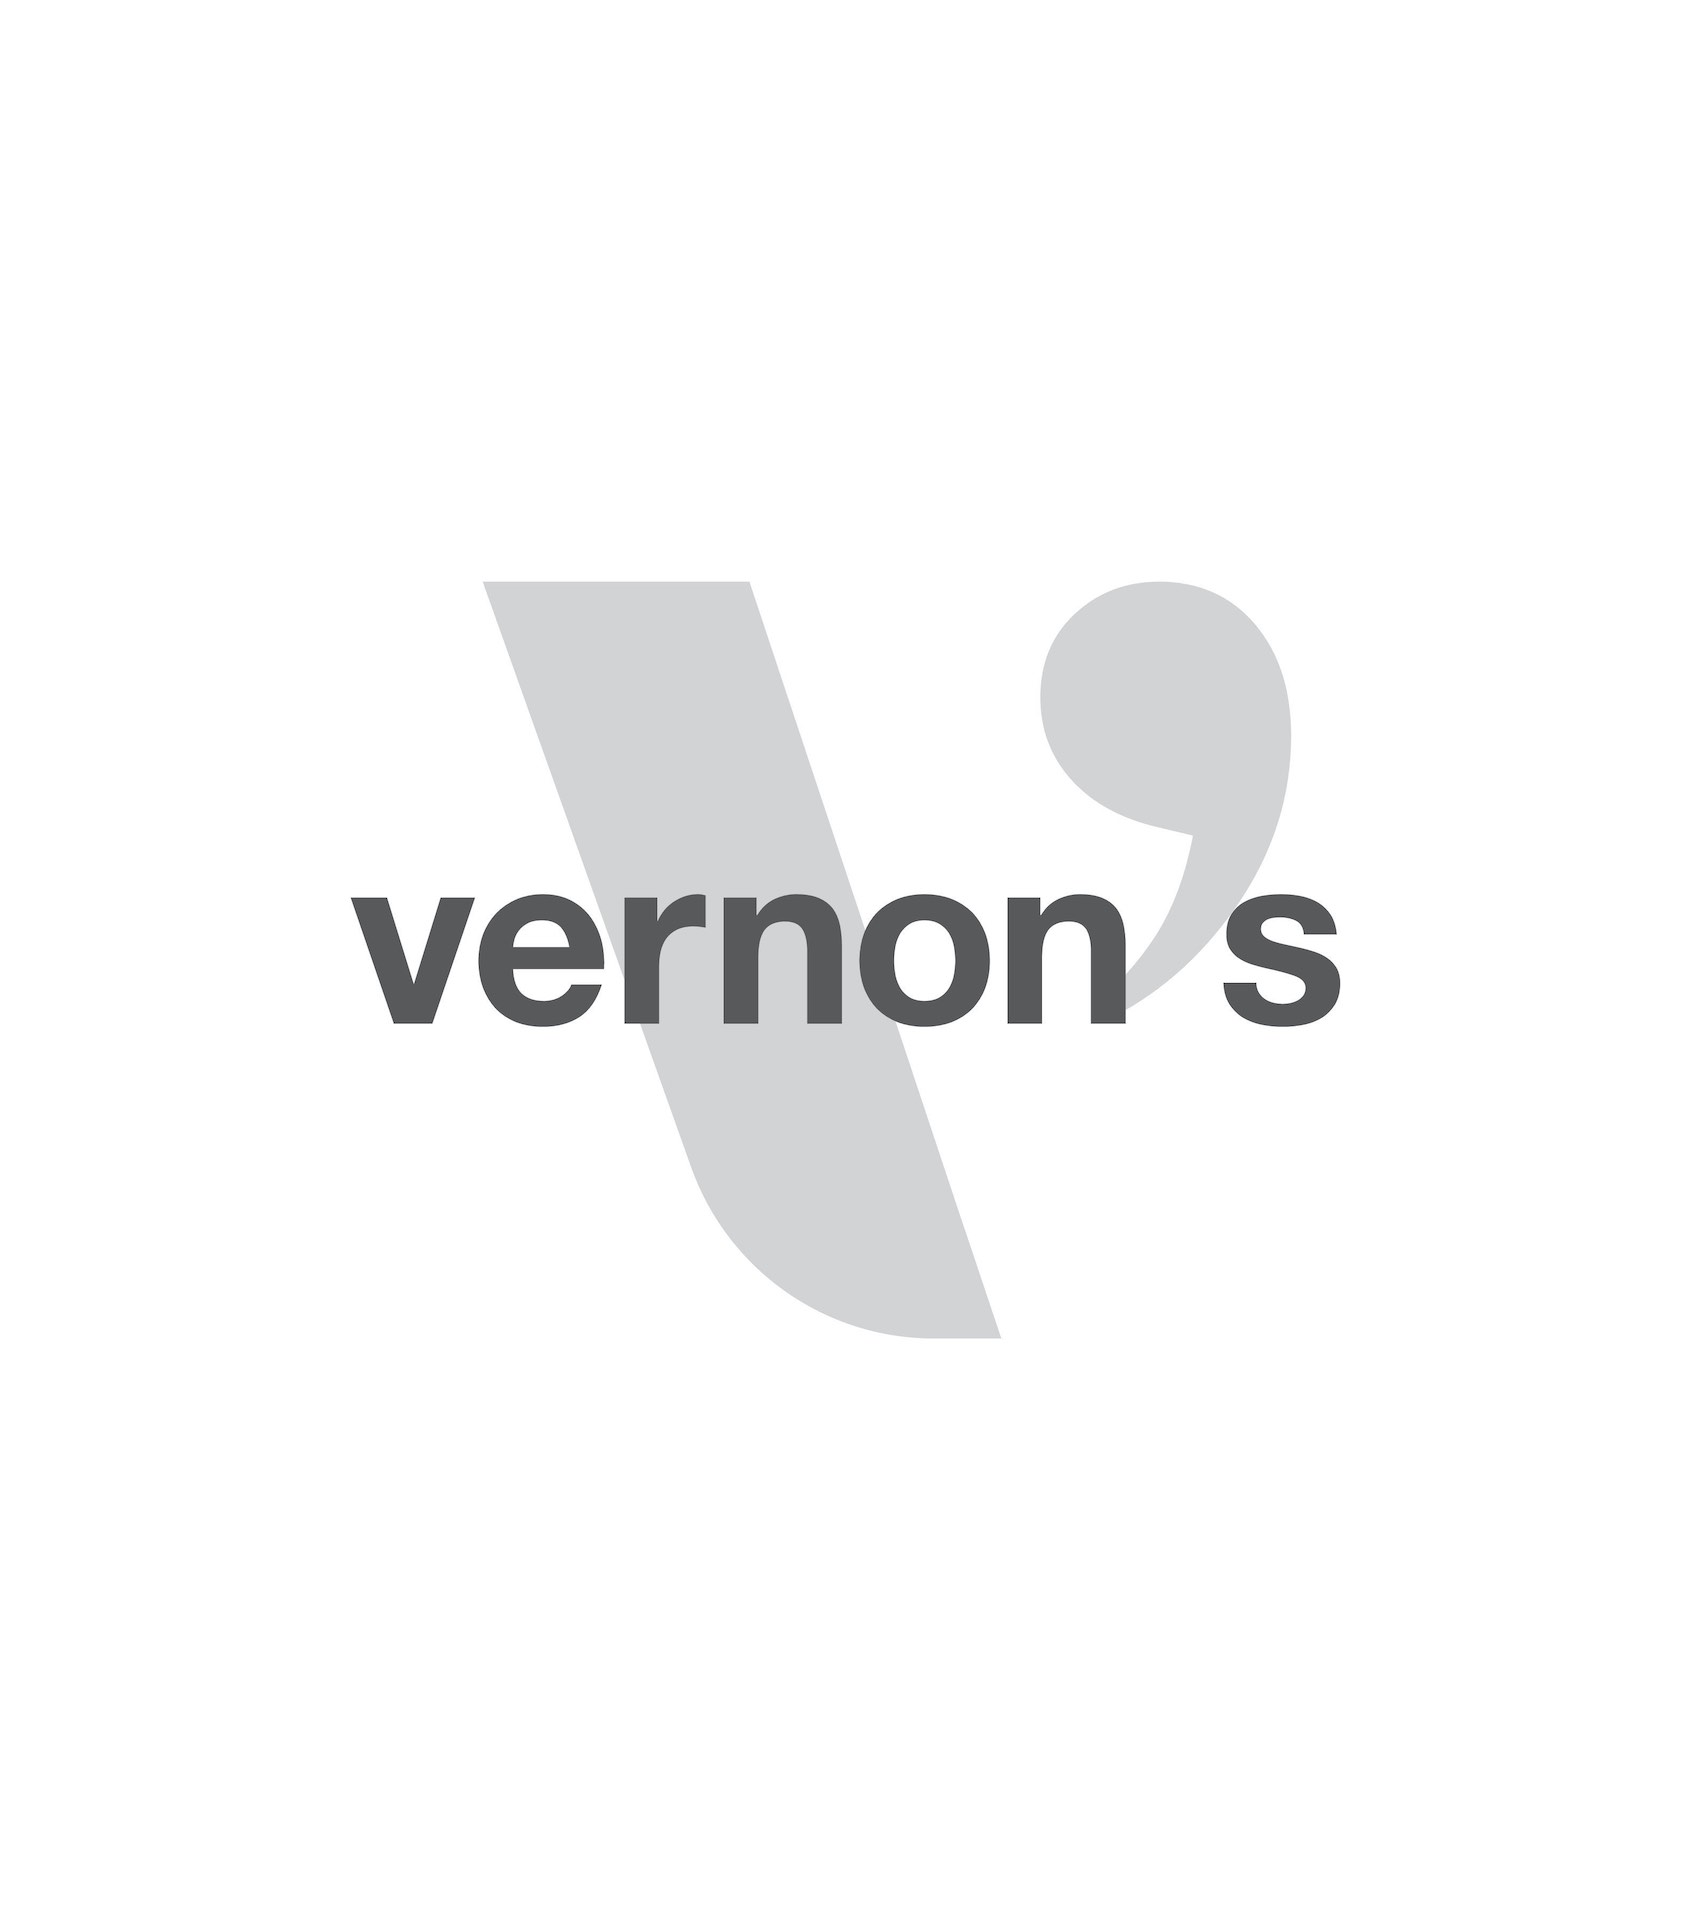 Vernons Pte. Ltd. company logo